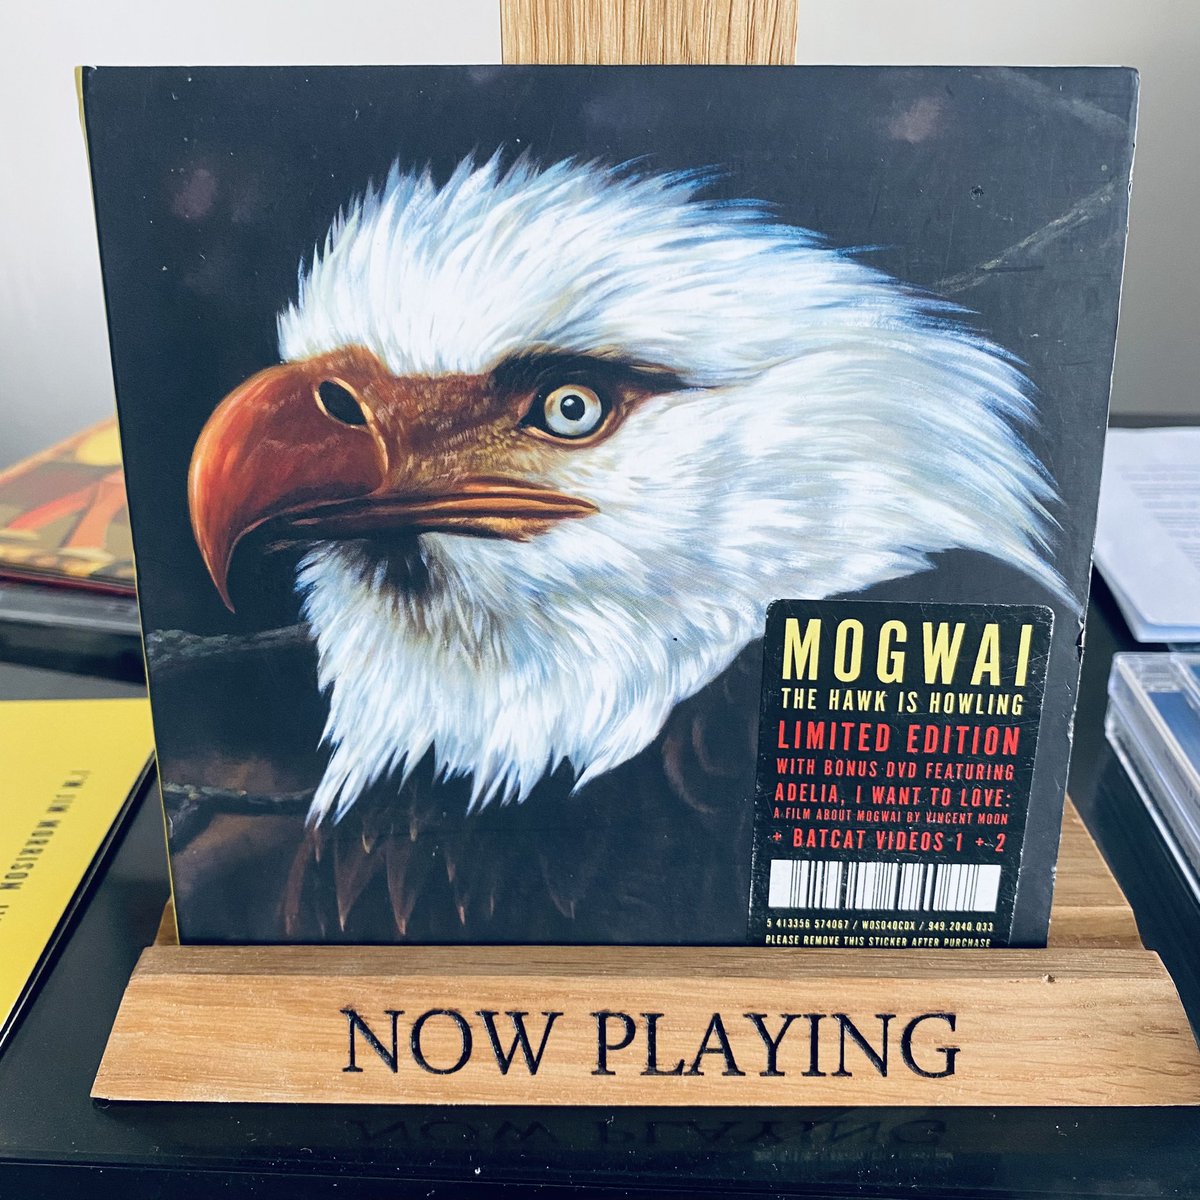 Mogwai “The Hawk is Howling”